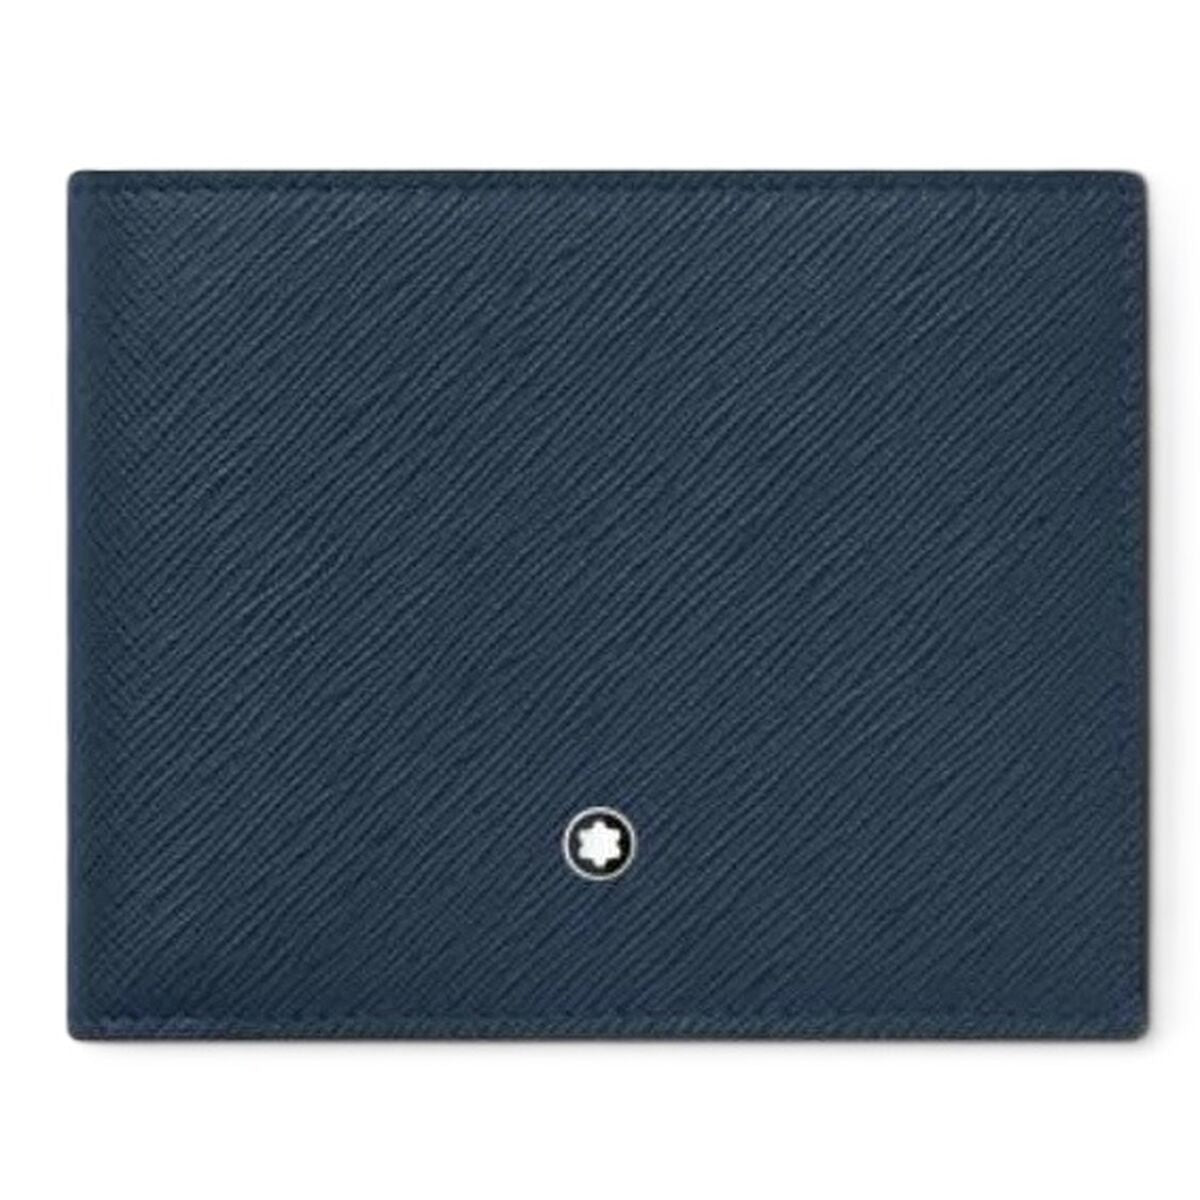 Kaufe Kartenetui Montblanc 131721 Haut Blau 11,5 x 9 cm bei AWK Flagship um € 373.00